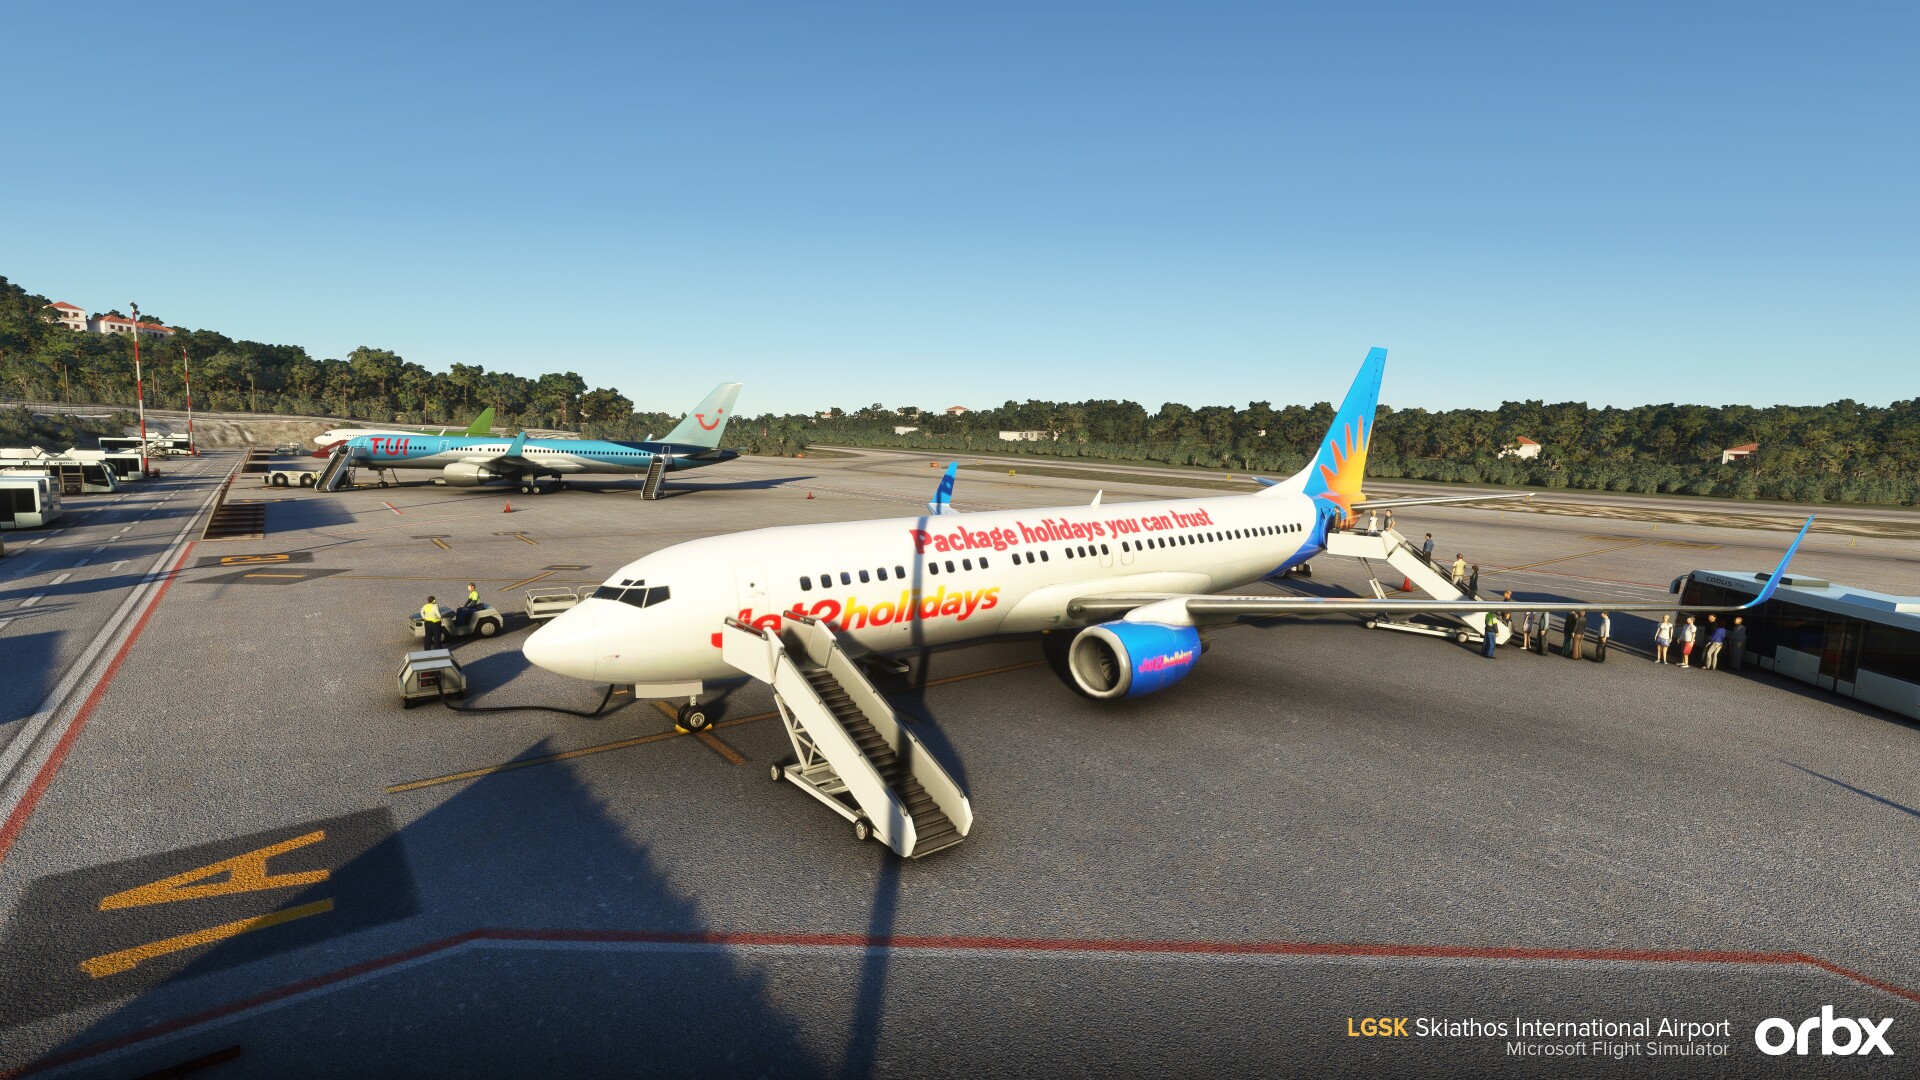 Microsoft Flight Simulator Skiathos